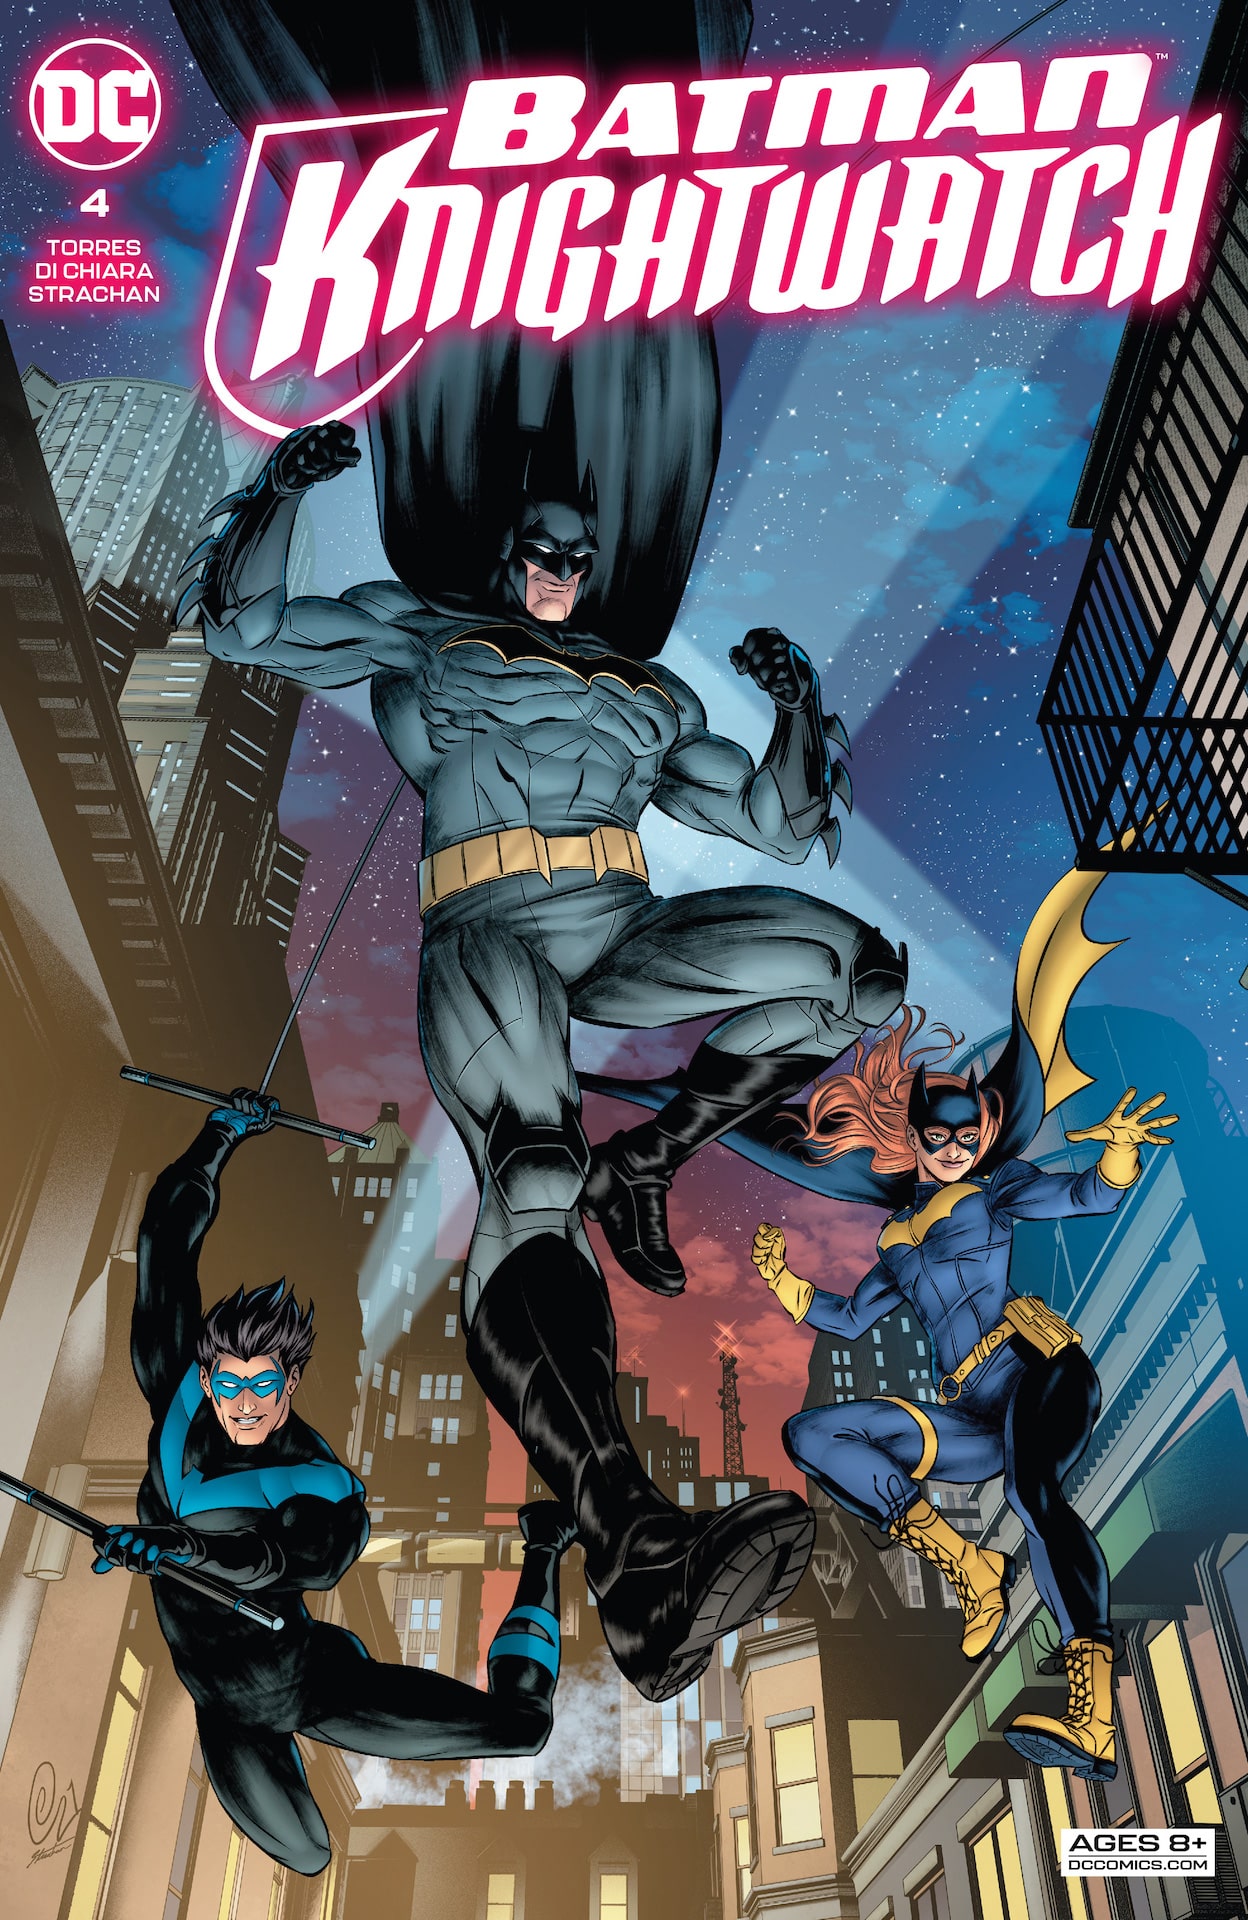 DC Preview: Batman: Knightwatch #4